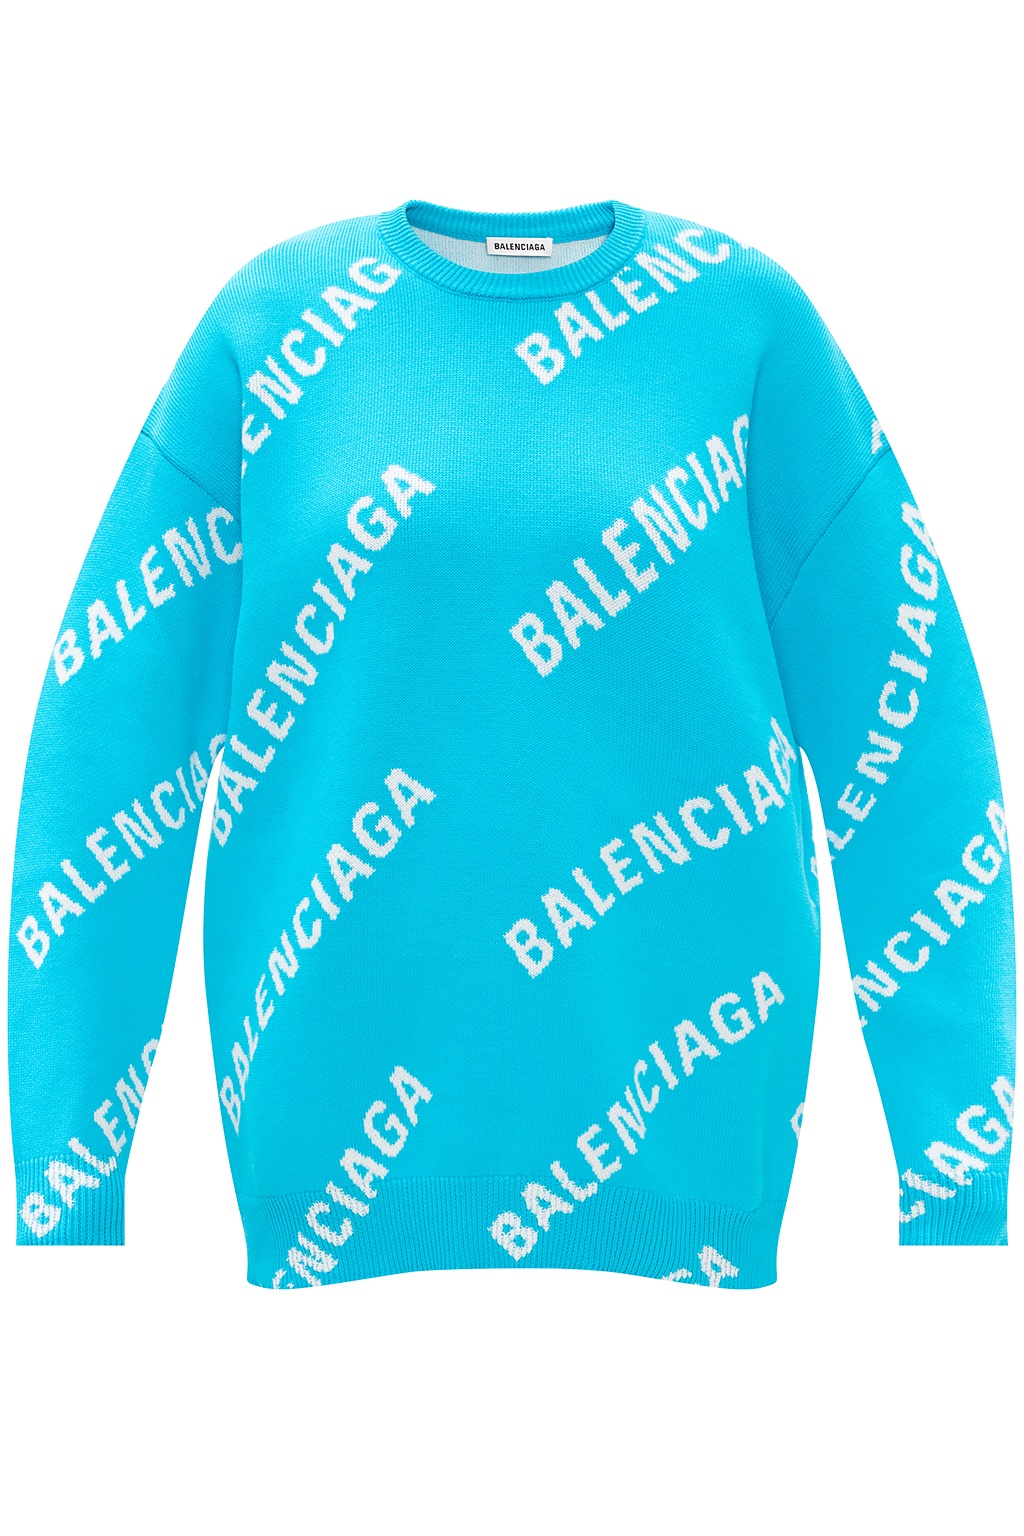 Sweater with logo Balenciaga - Vitkac 